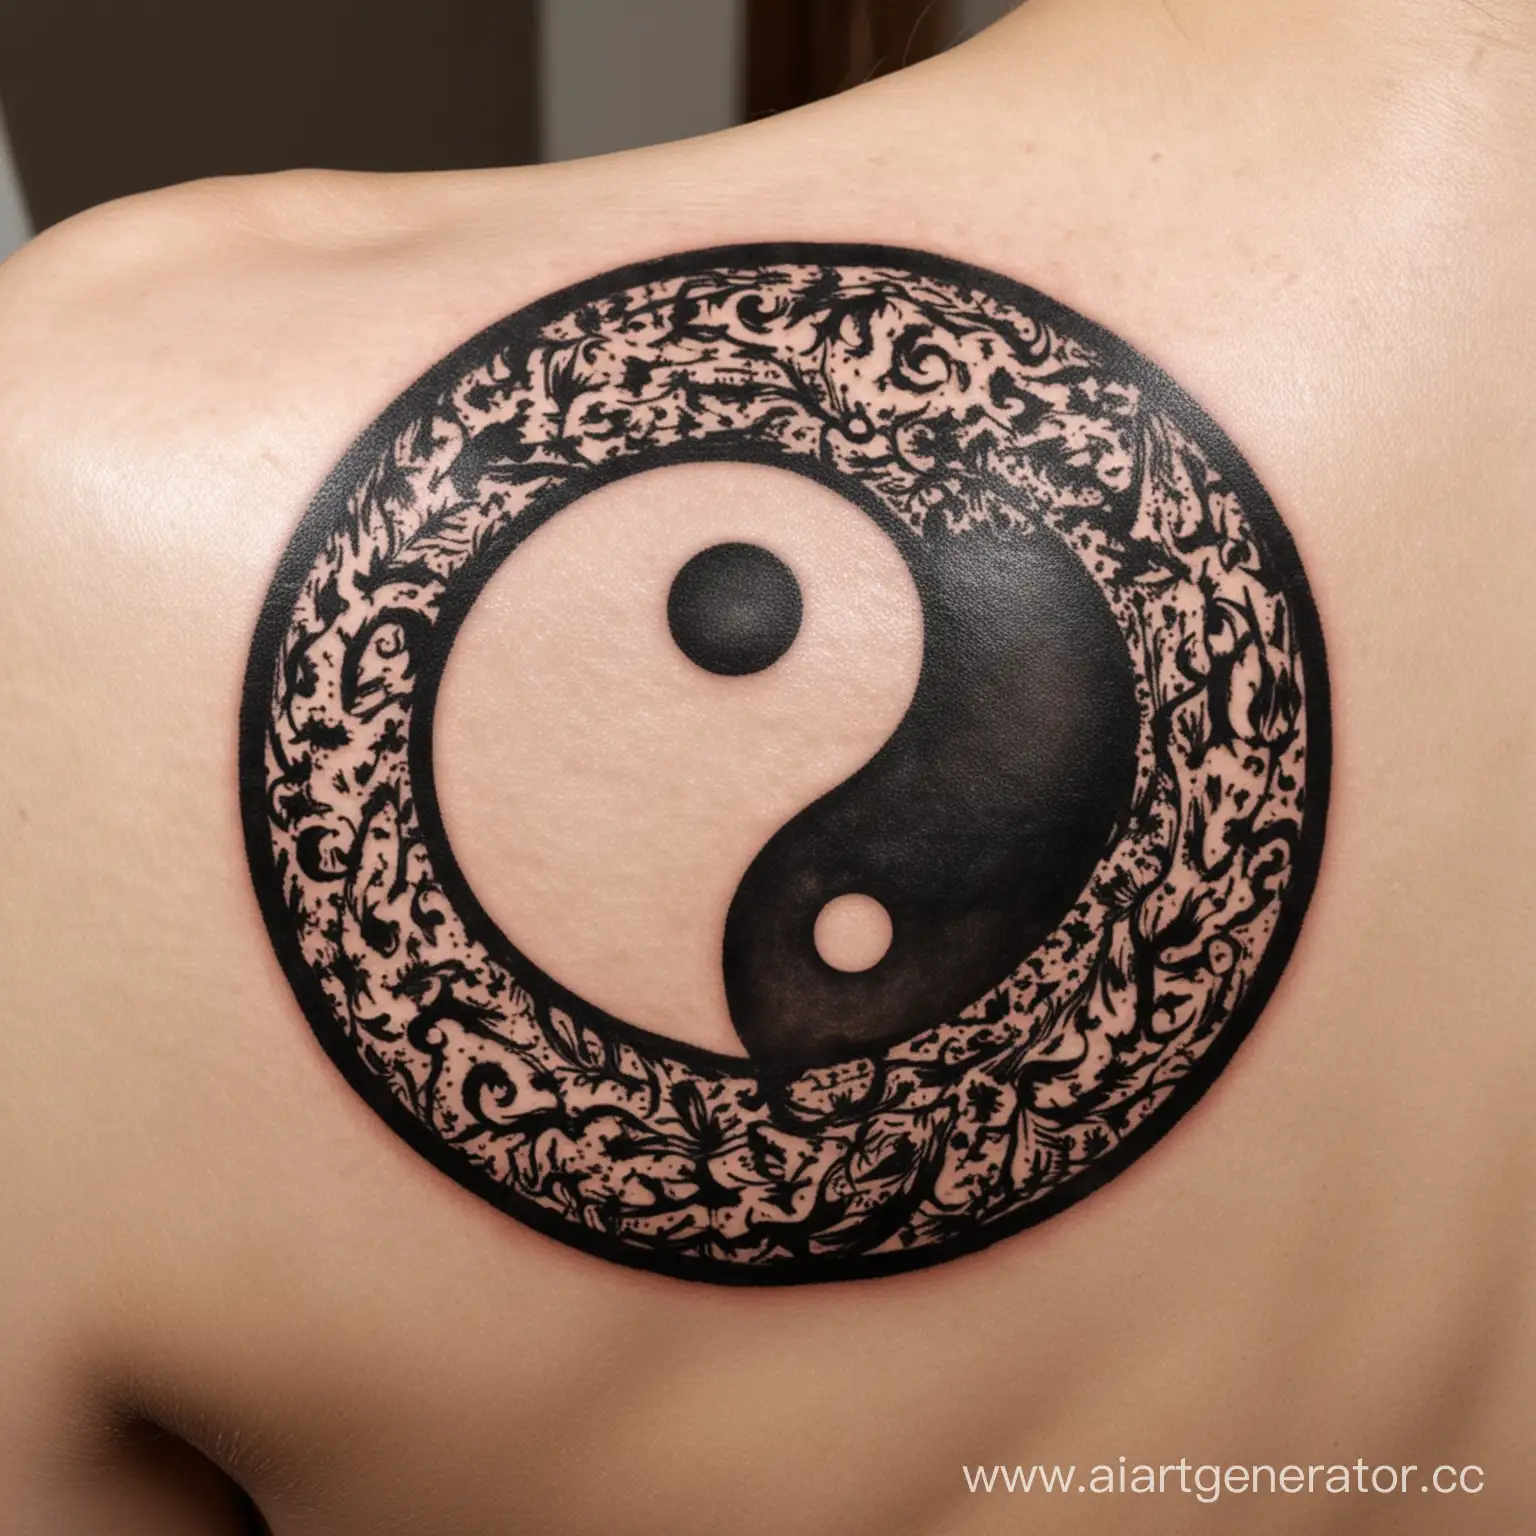 Tattoo: Yin-yang, black half peeling like skin, revealing light beneath. Triumph of good.